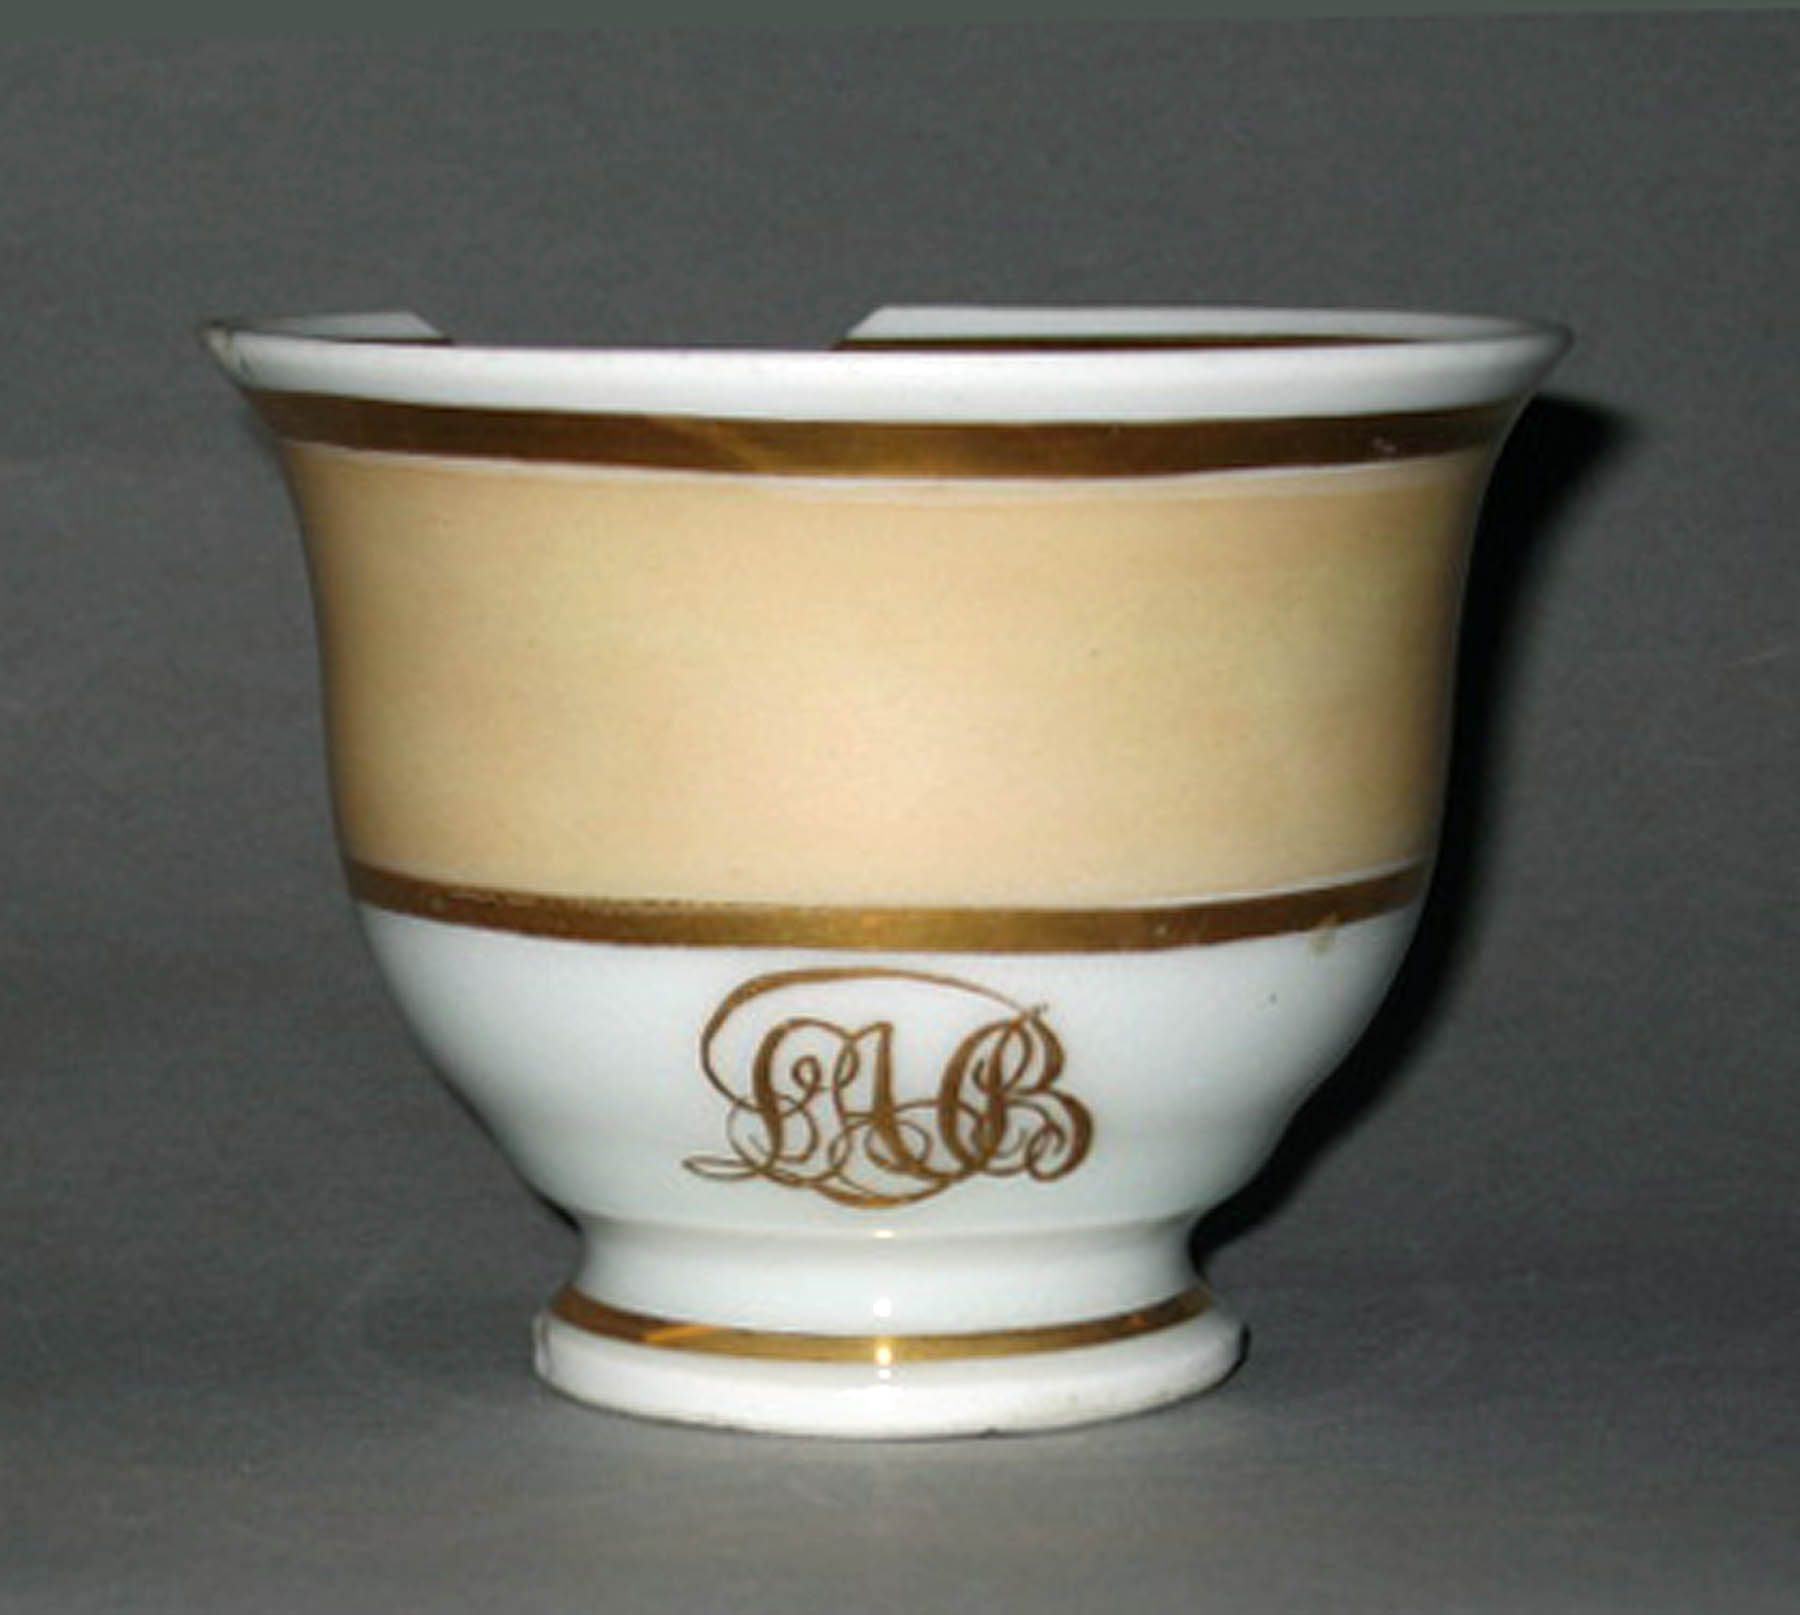 1954.0077.036 Porcelain teacup